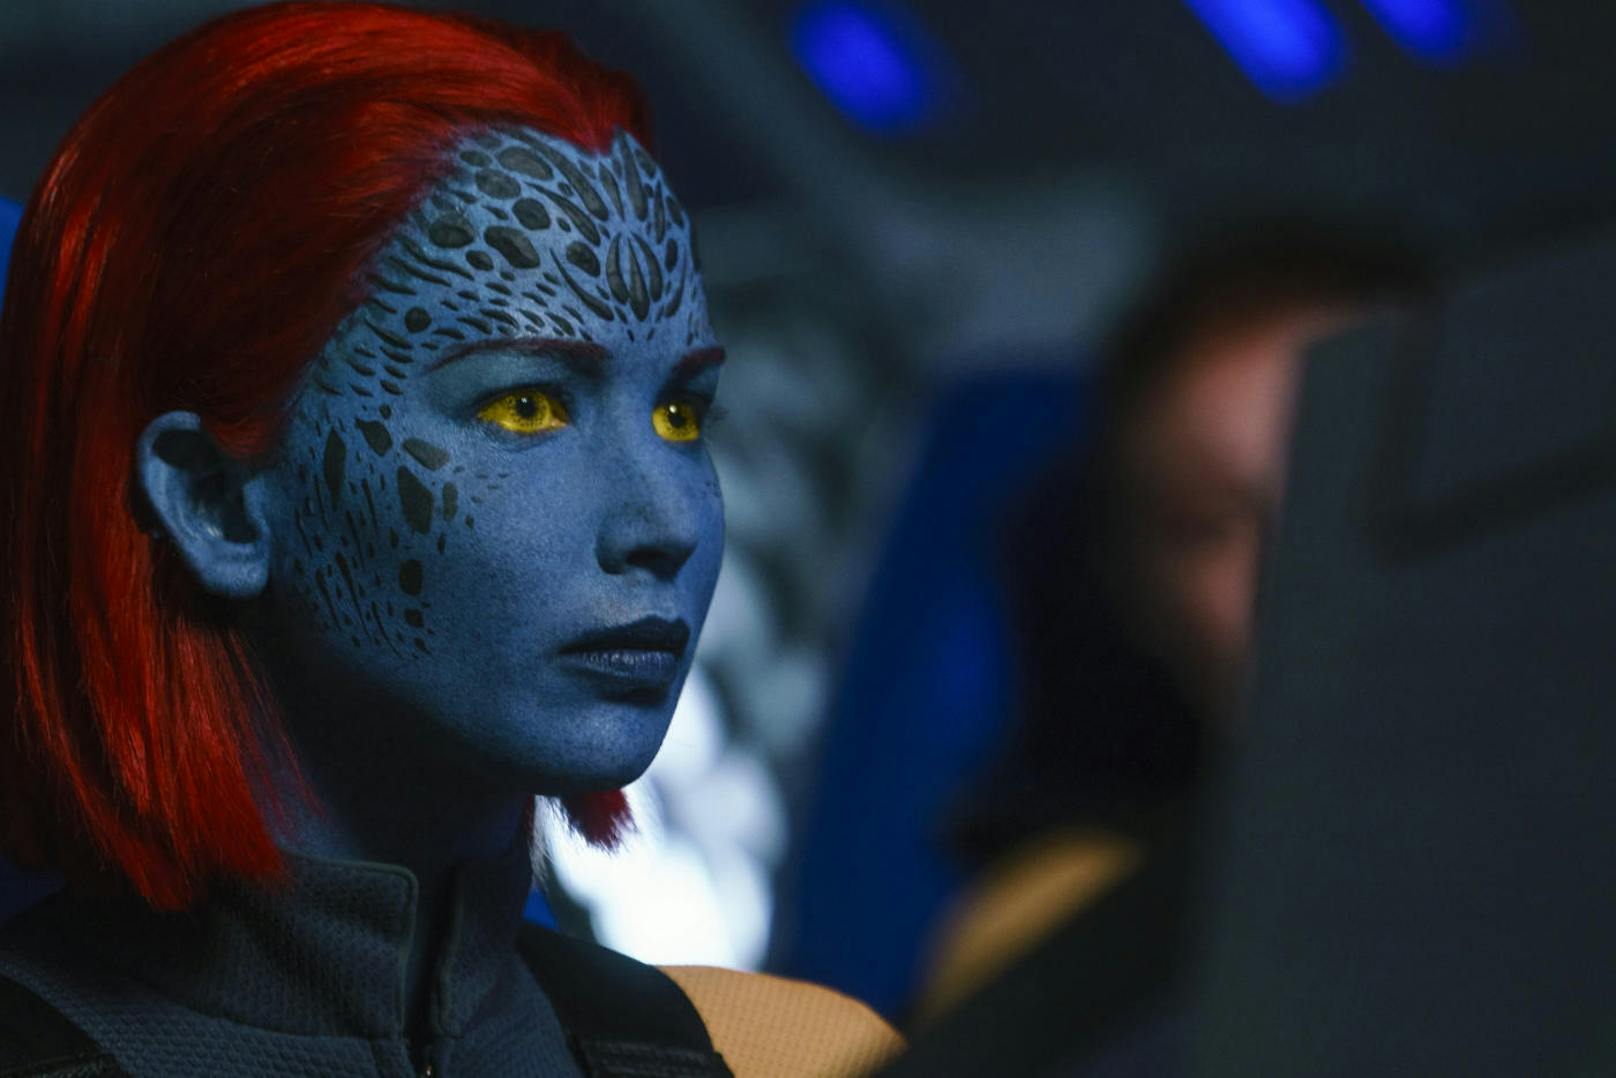 Jennifer Lawrence als Mystique in "X-Men: Dark Phoenix".